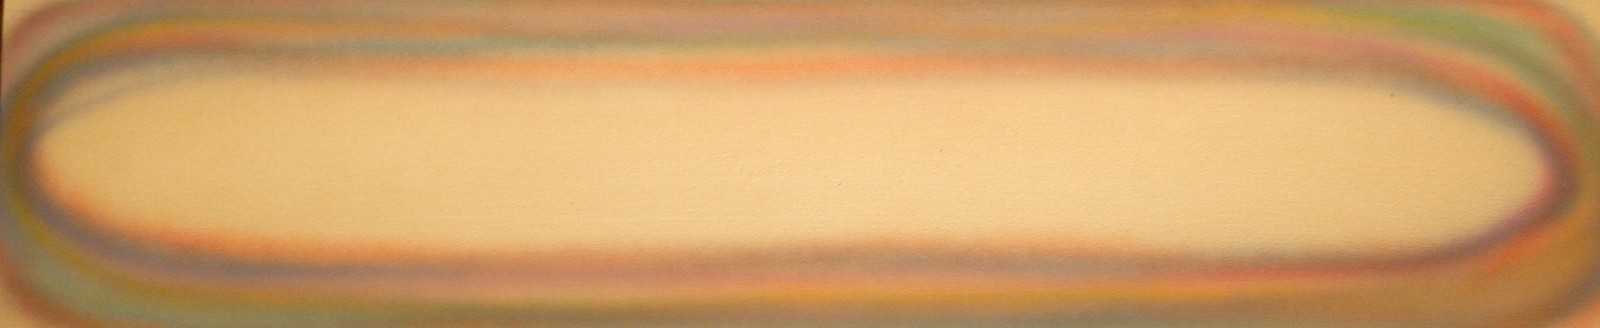 Dan Christensen (Estate), Untitled 488S3, 1988
Acrylic on canvas, 11 x 52 inches
CHRI0052